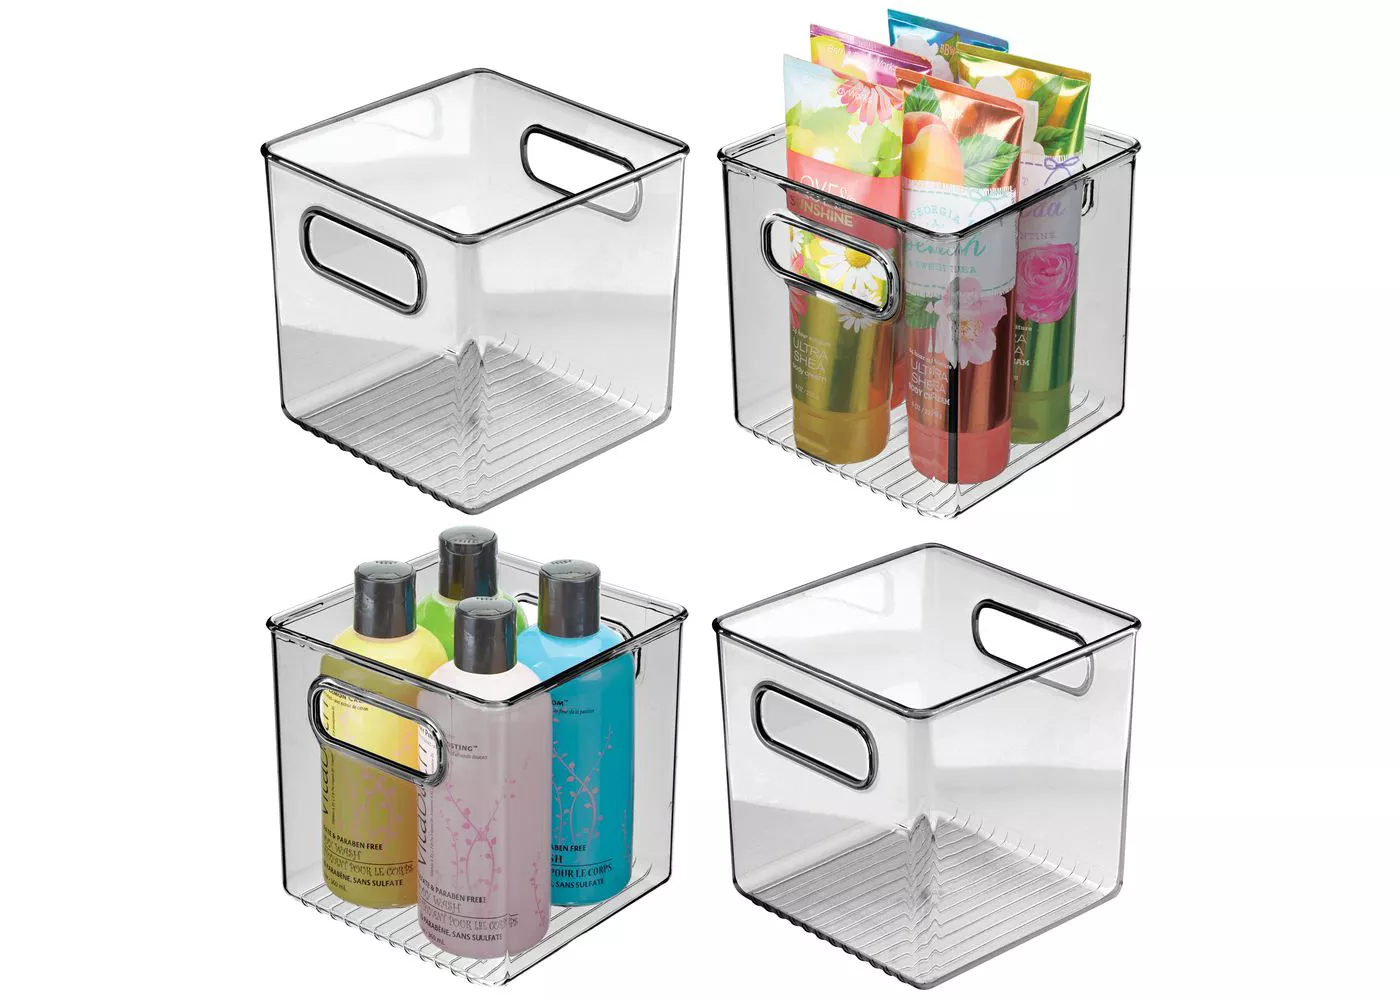 mDesign Plastic Storage Bin with Handles for Bathroom, 4 Pack- Smoke Gray - image 2 of 9